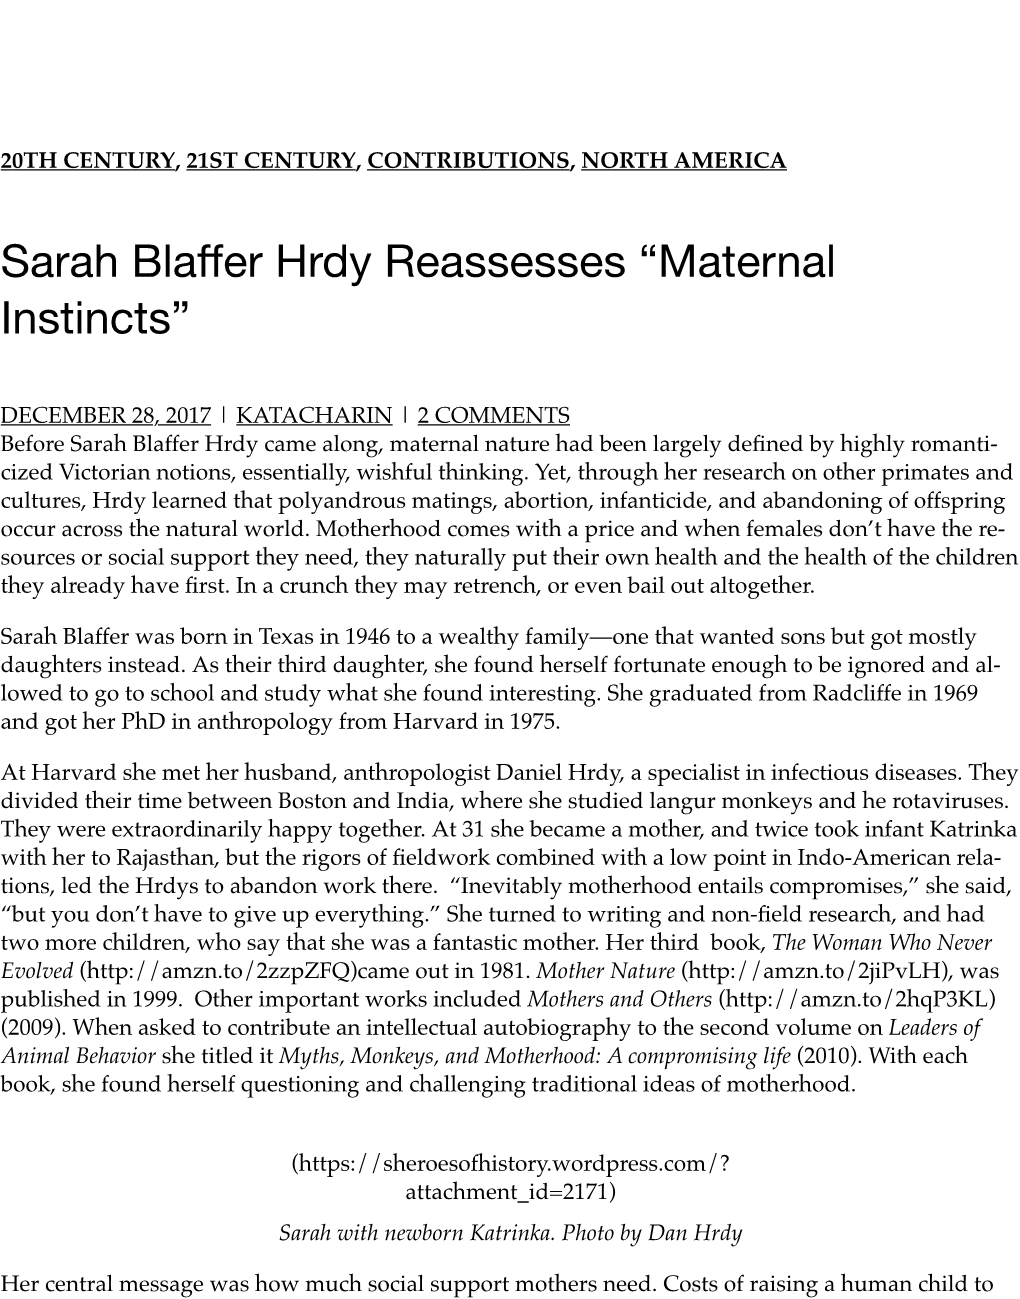 Sarah Blaffer Hrdy Reassesses “Maternal Instincts”